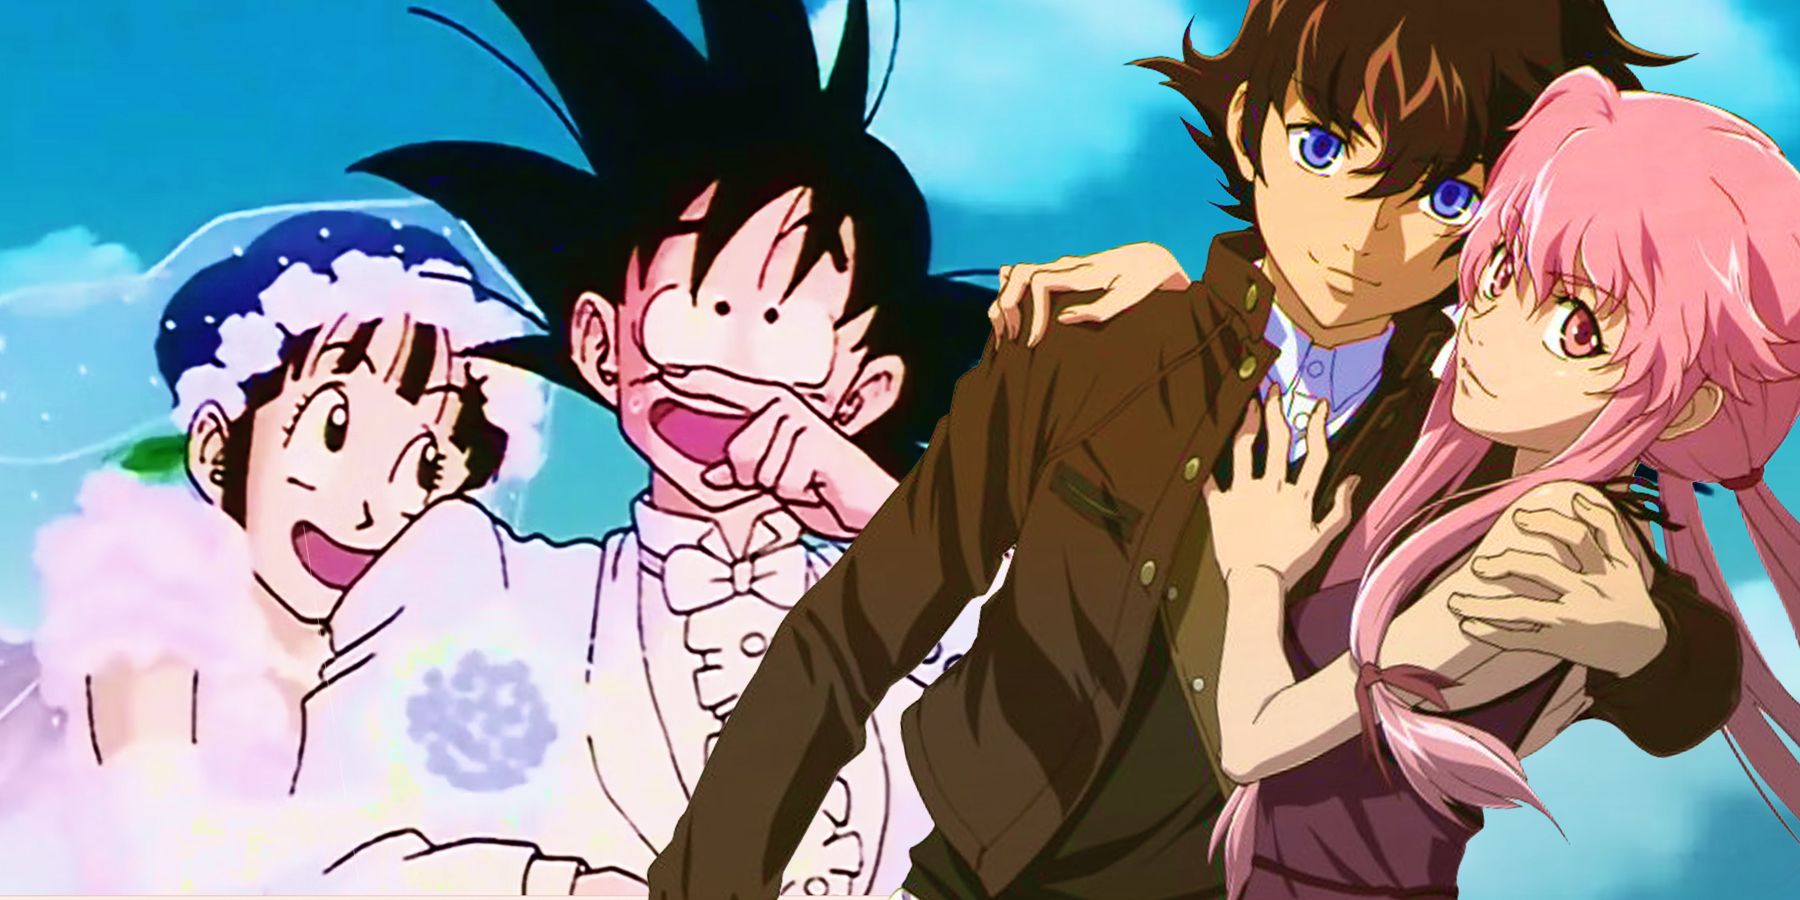 On the left, Goku and Chichi smiling on their wedding day. On the right, Yukiteru and Yuno of Future Diary with Yuno's arms around Yukiteru.